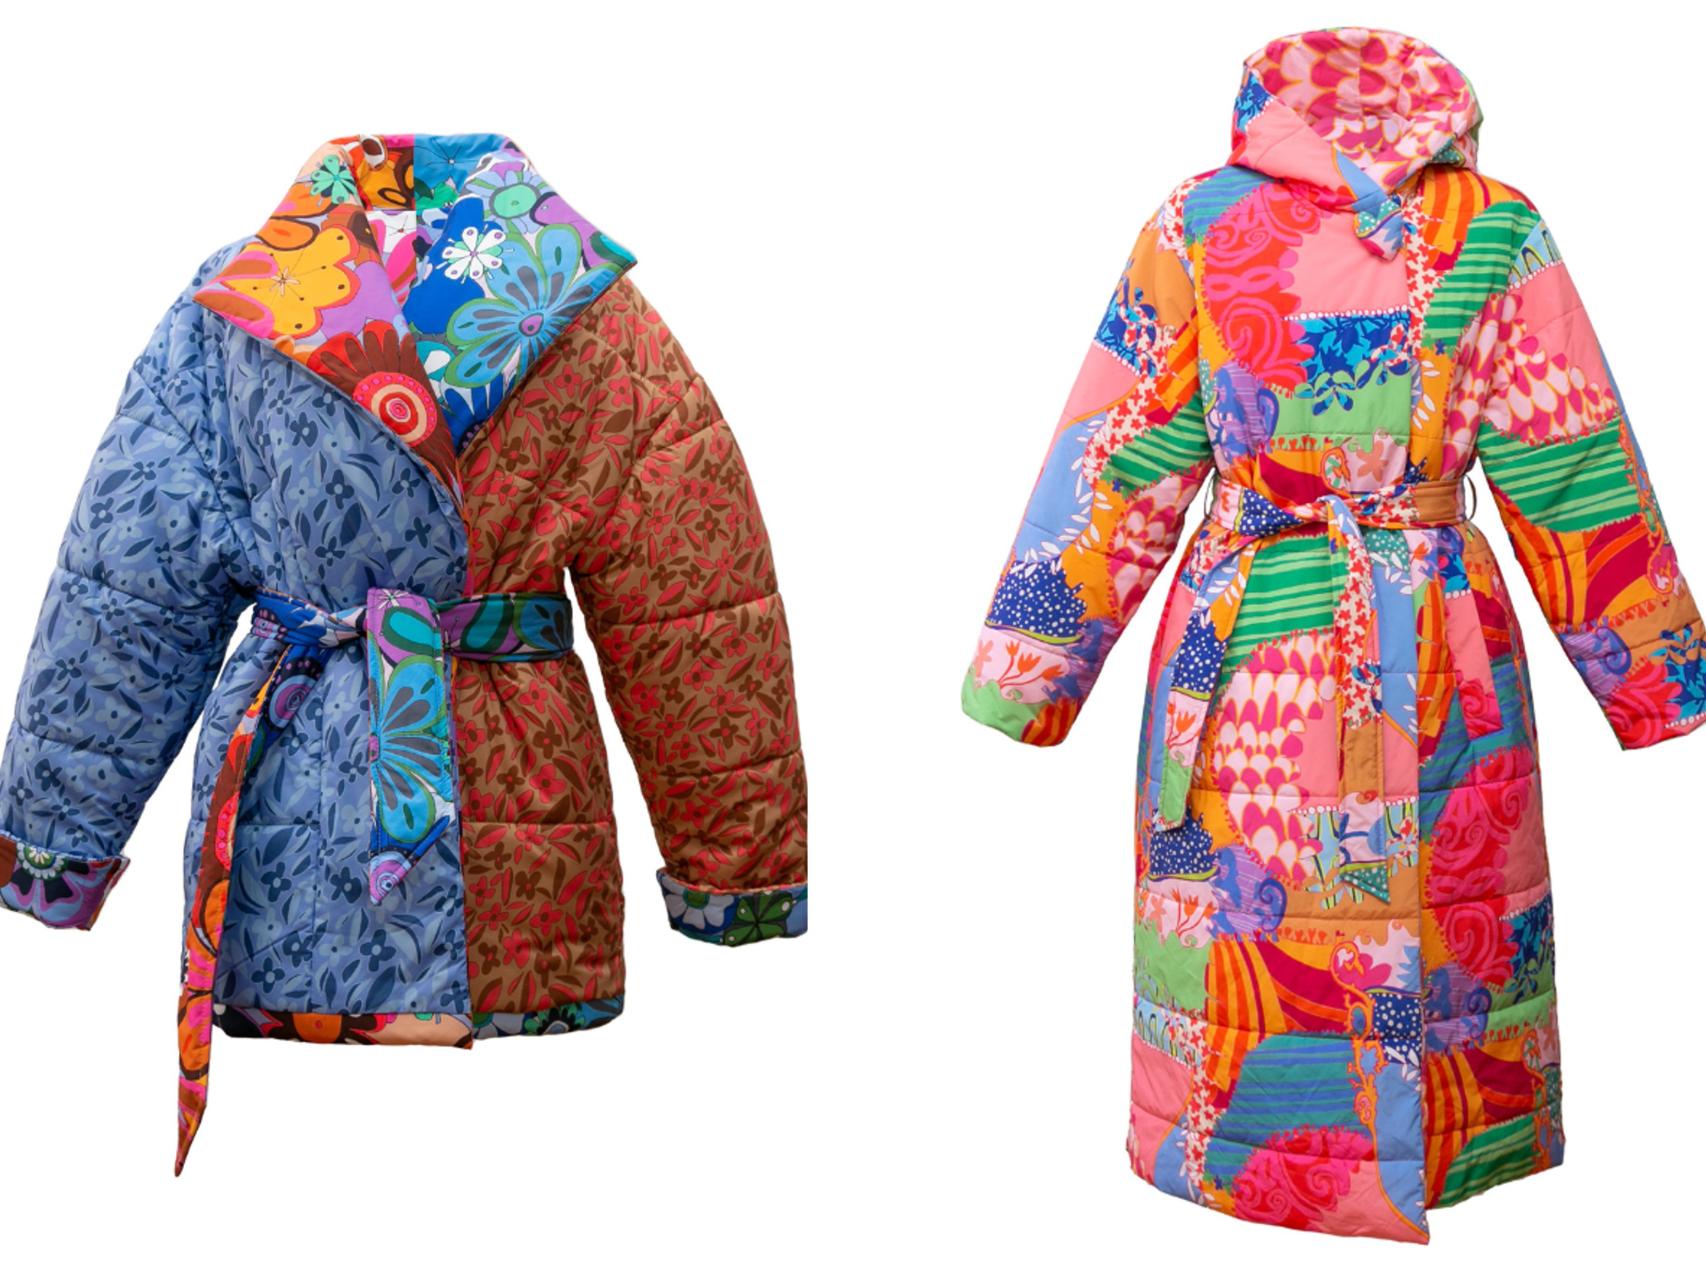 Izquierda: Snowdown coat, 375,77 euros / Derecha: Abrigo Nevis, 477,92 euros.